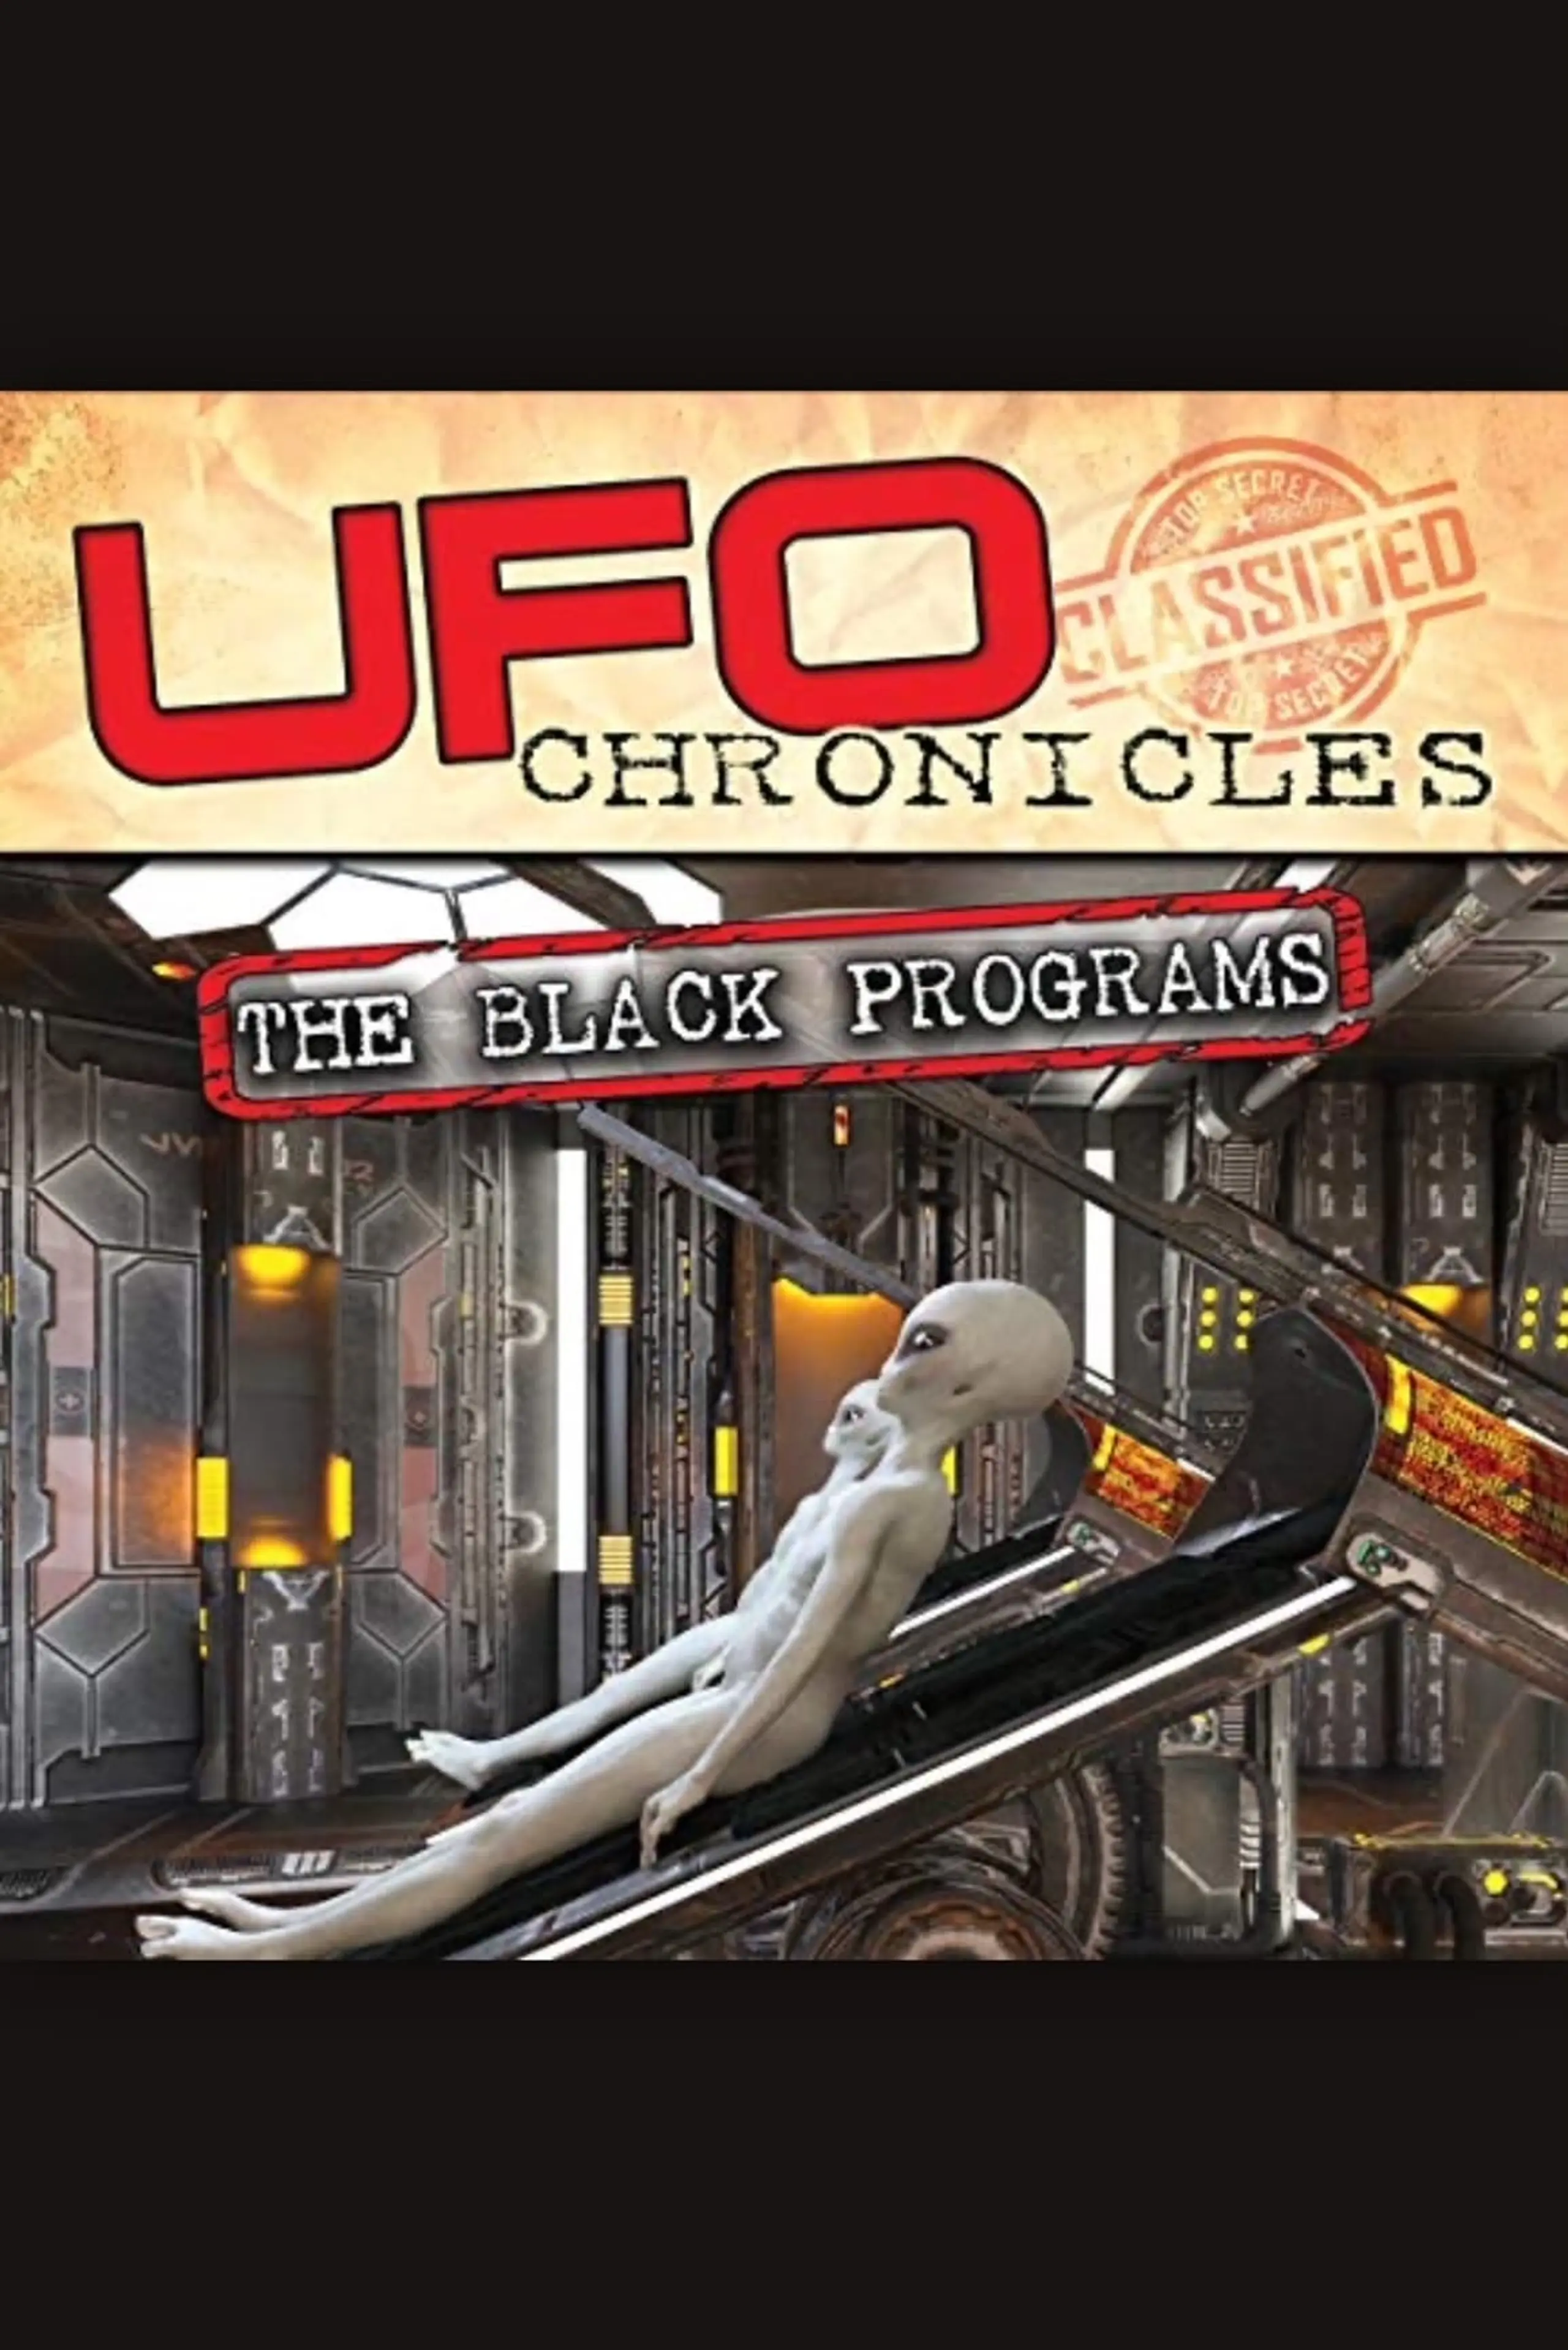 UFO Chronicles: The Black Programs